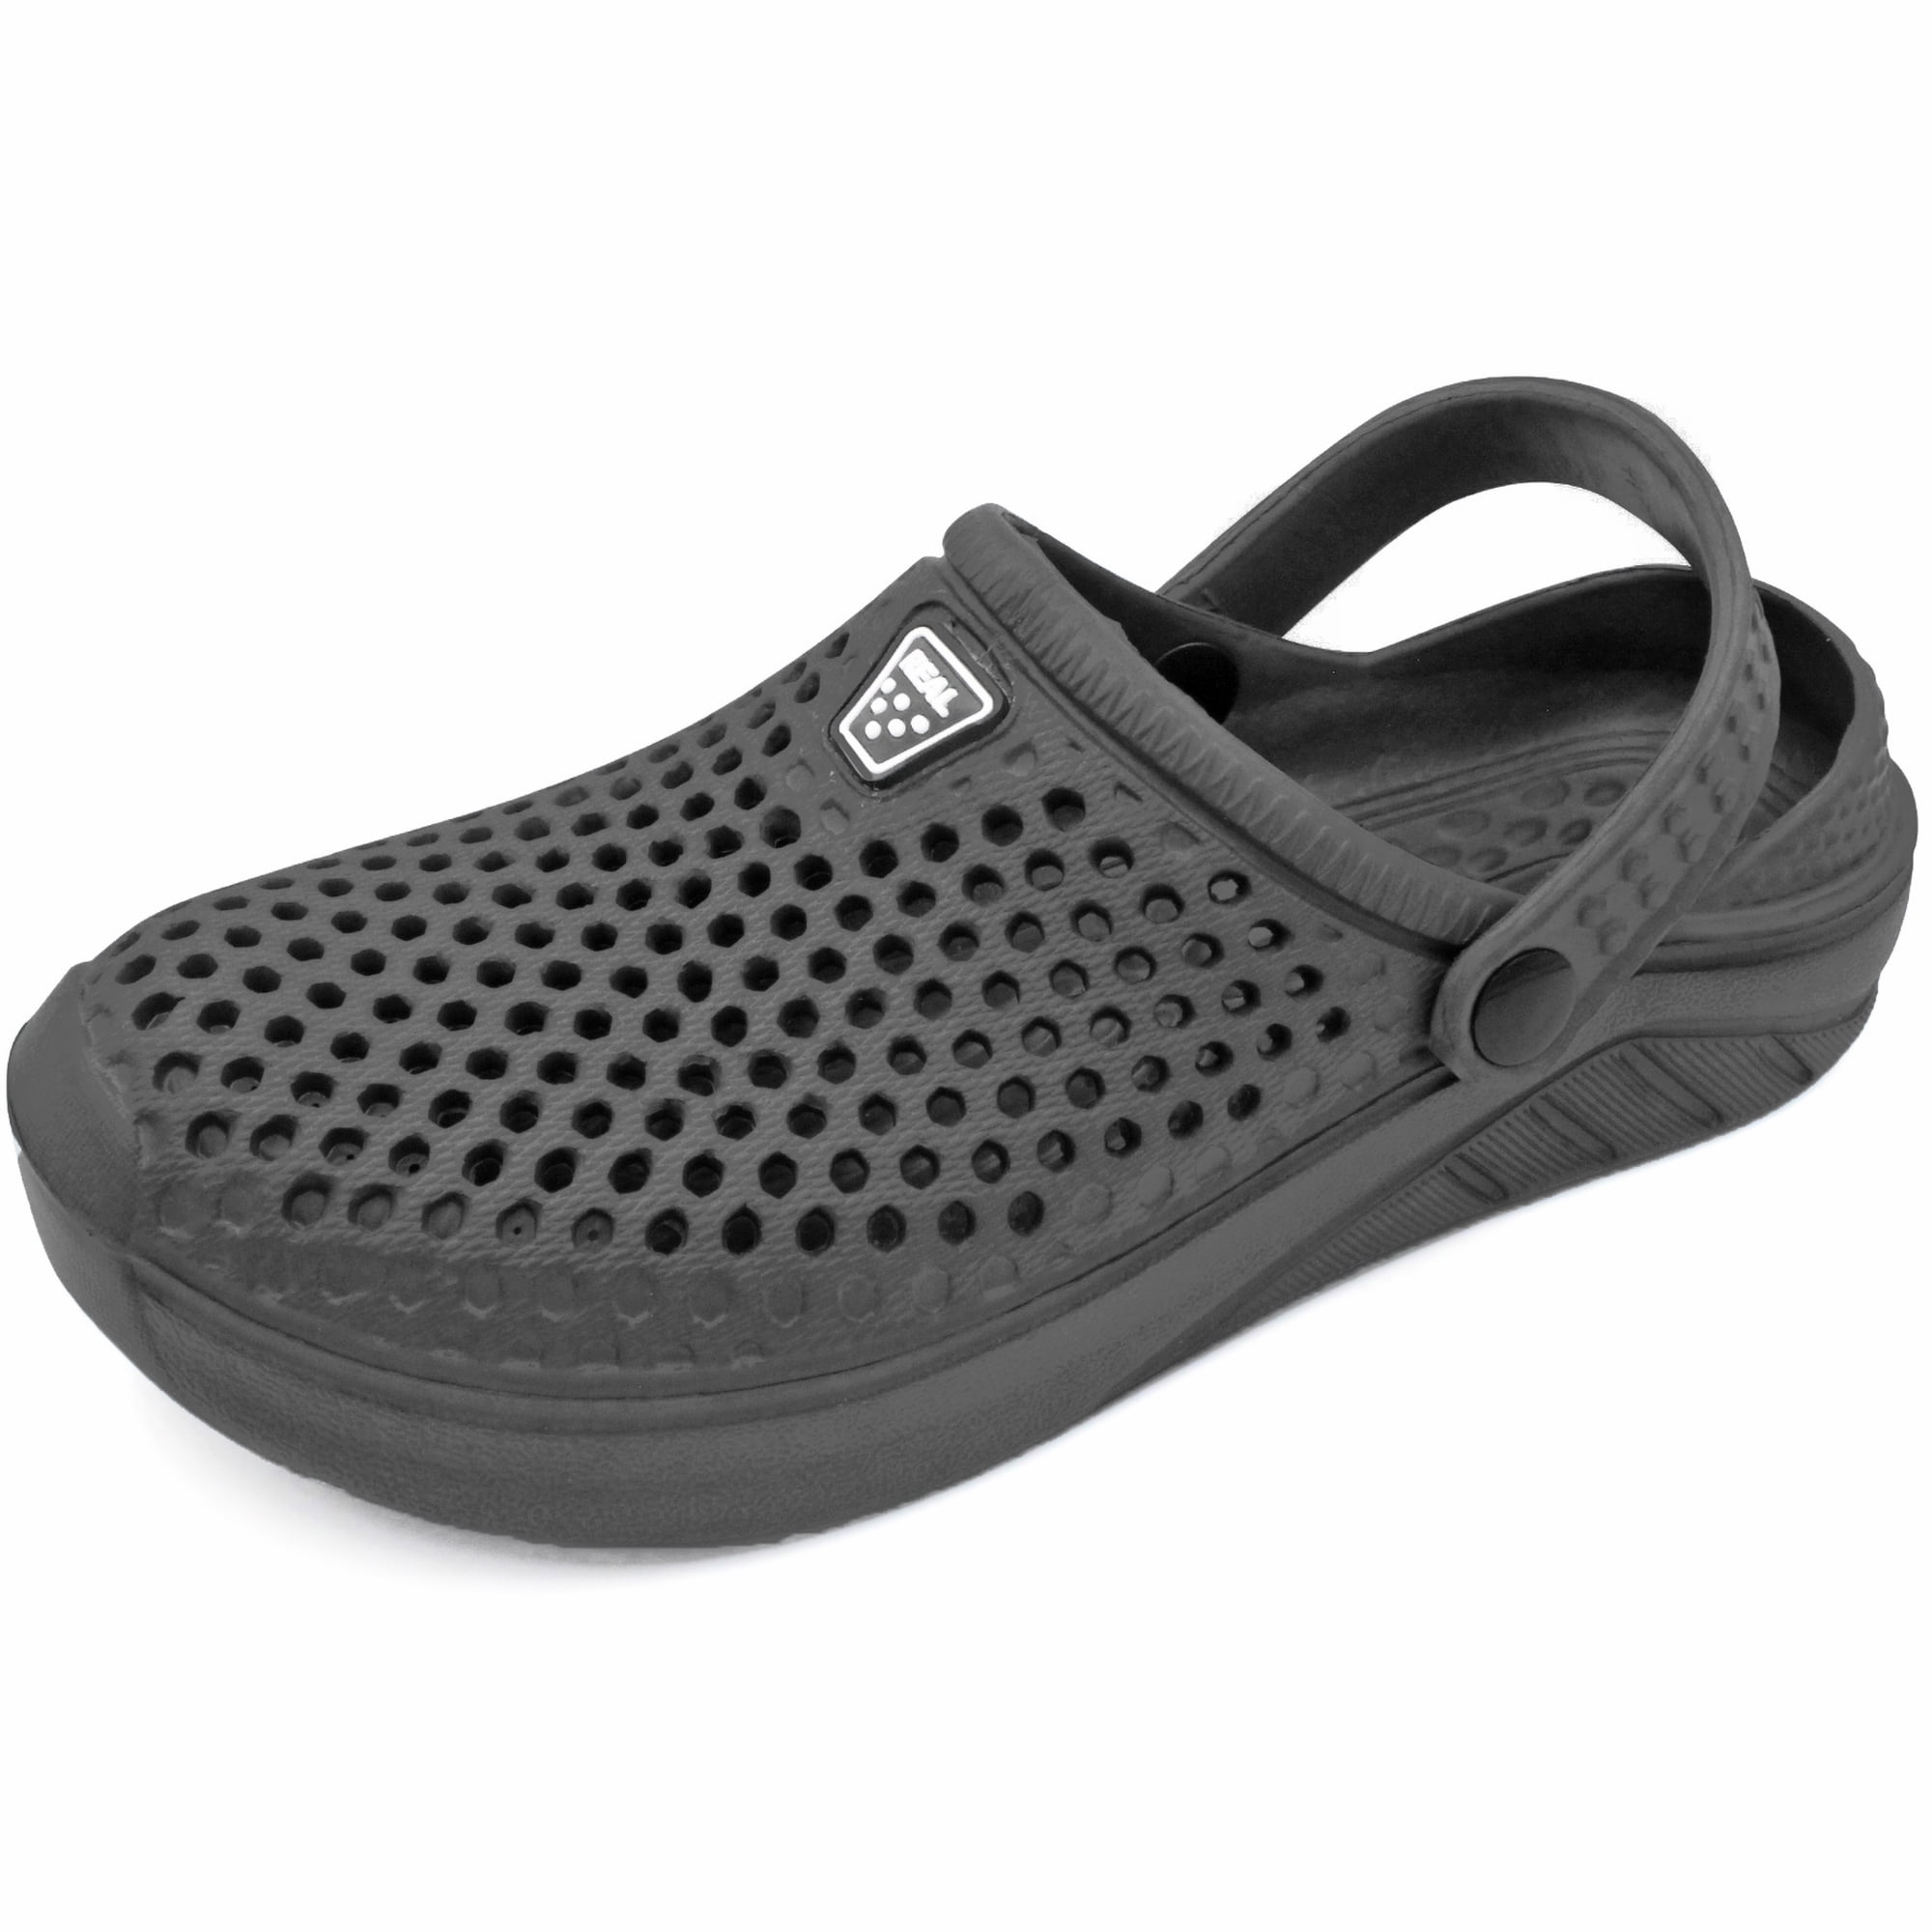 Ventana Men’s Clogs Garden Shoes | Water Sandal for Gardening | Mens ...